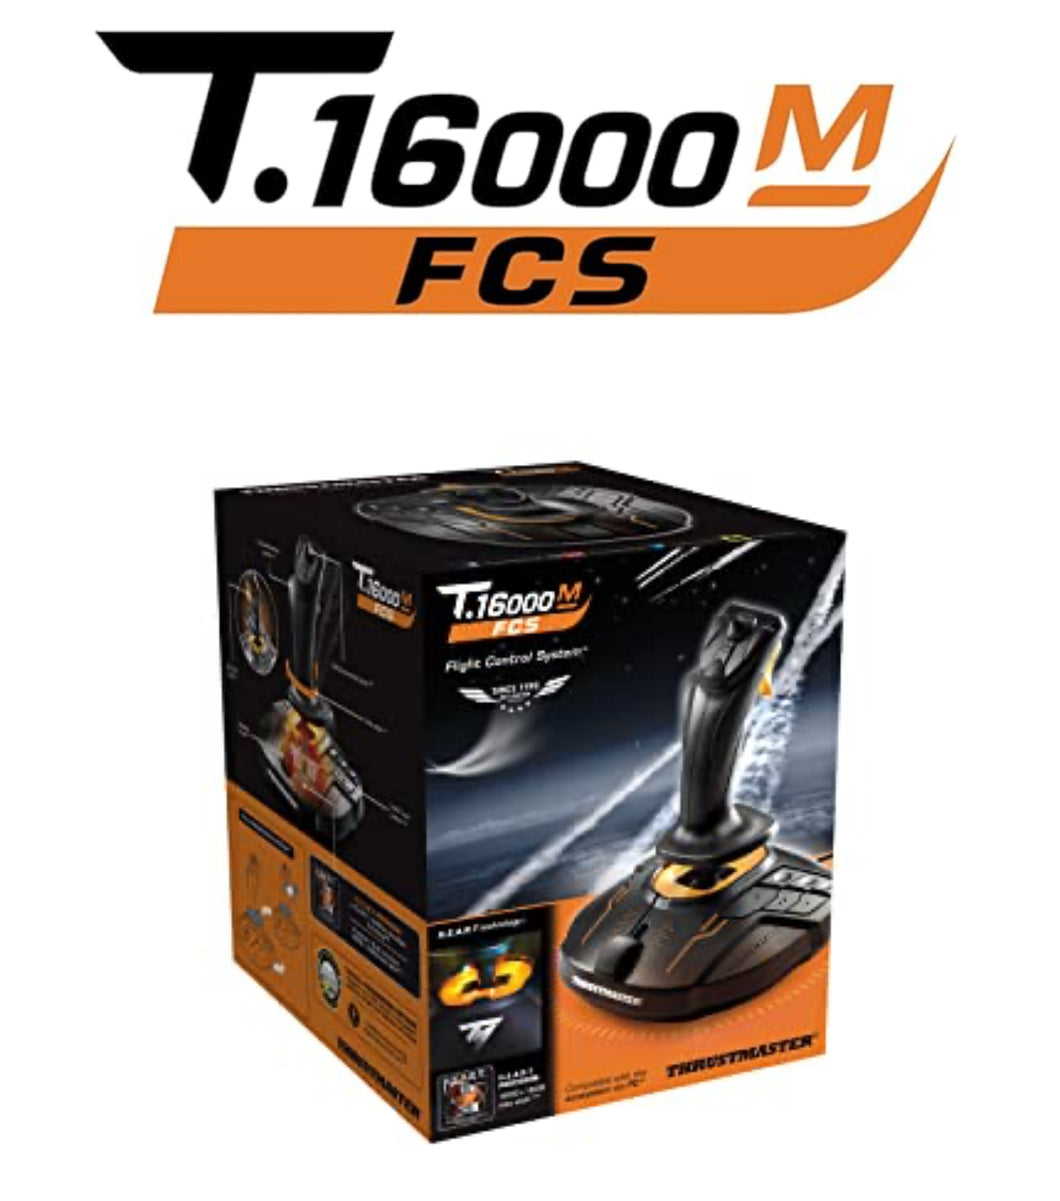 Thrustmaster T16000M FCS - Joystick for PC